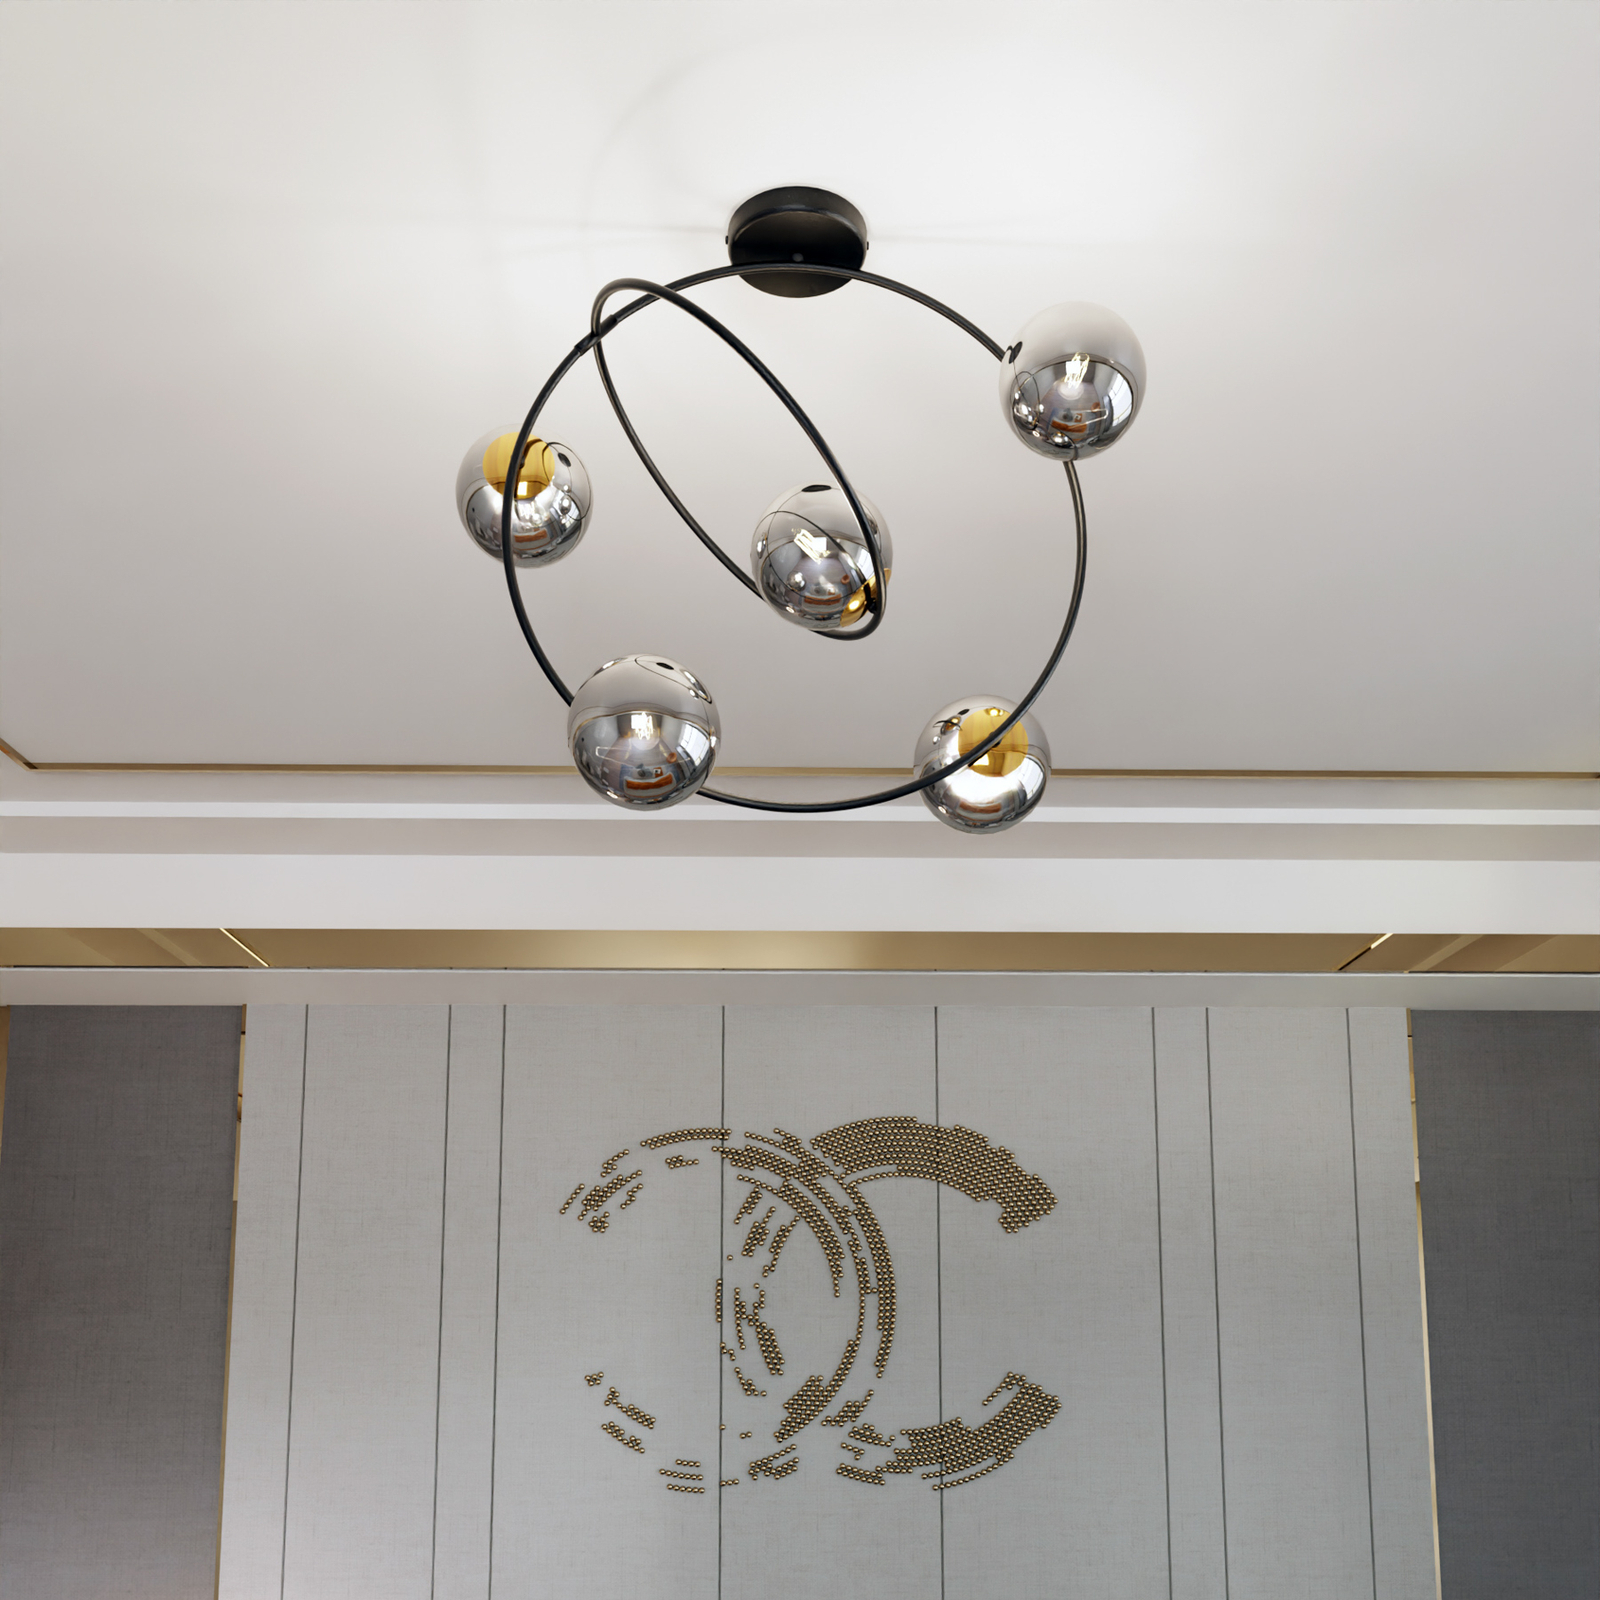 Ascella ceiling light, vertical, 5-bulb, graphite